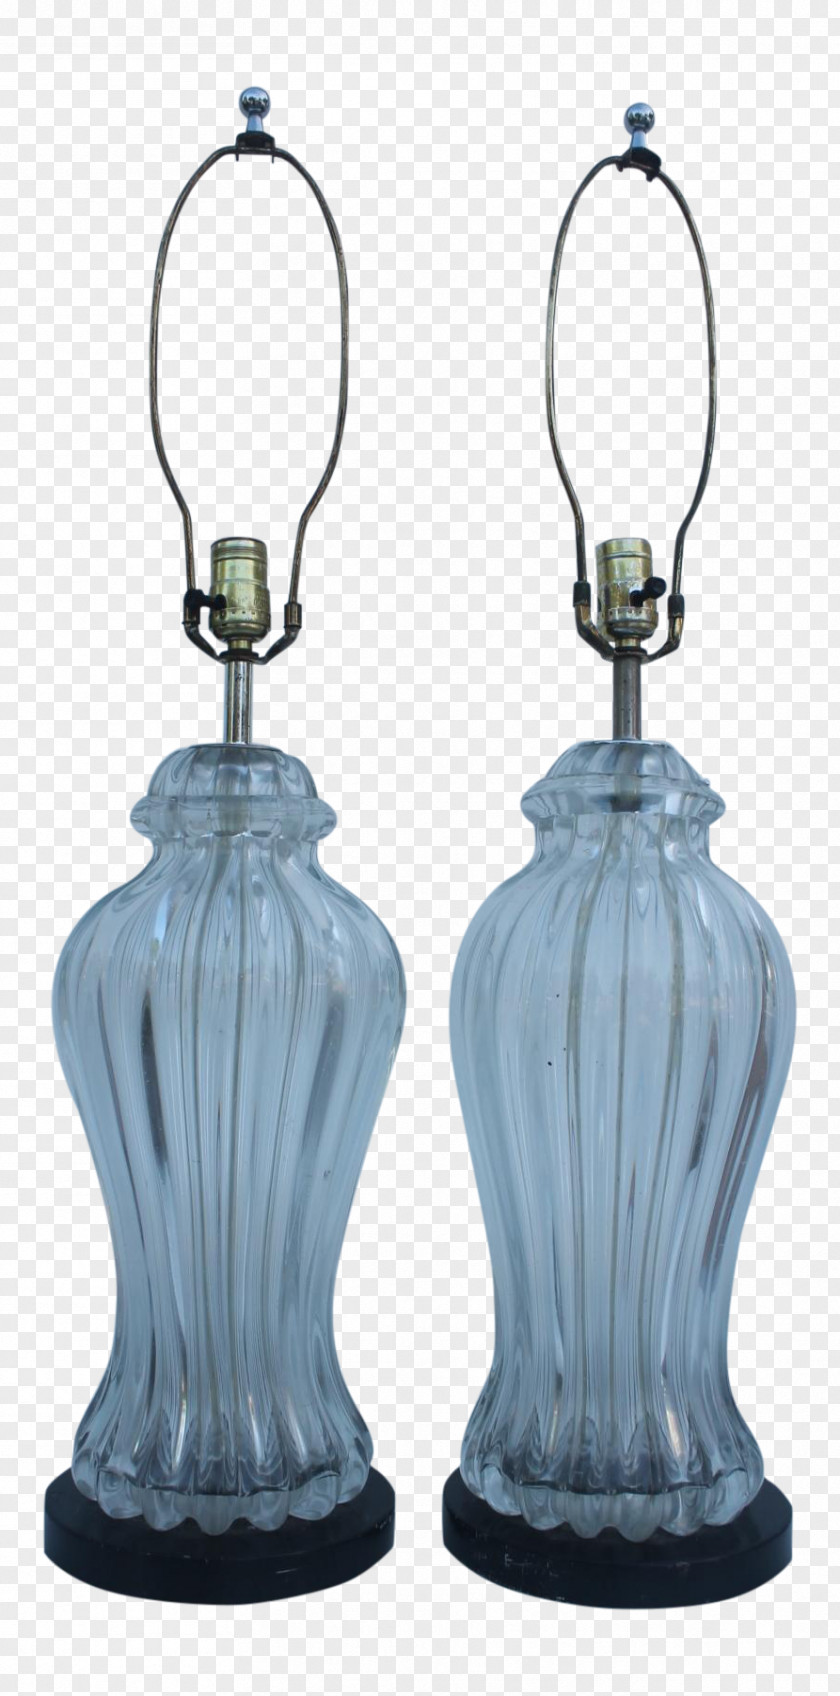 Glass Murano Chandelier Bottle PNG